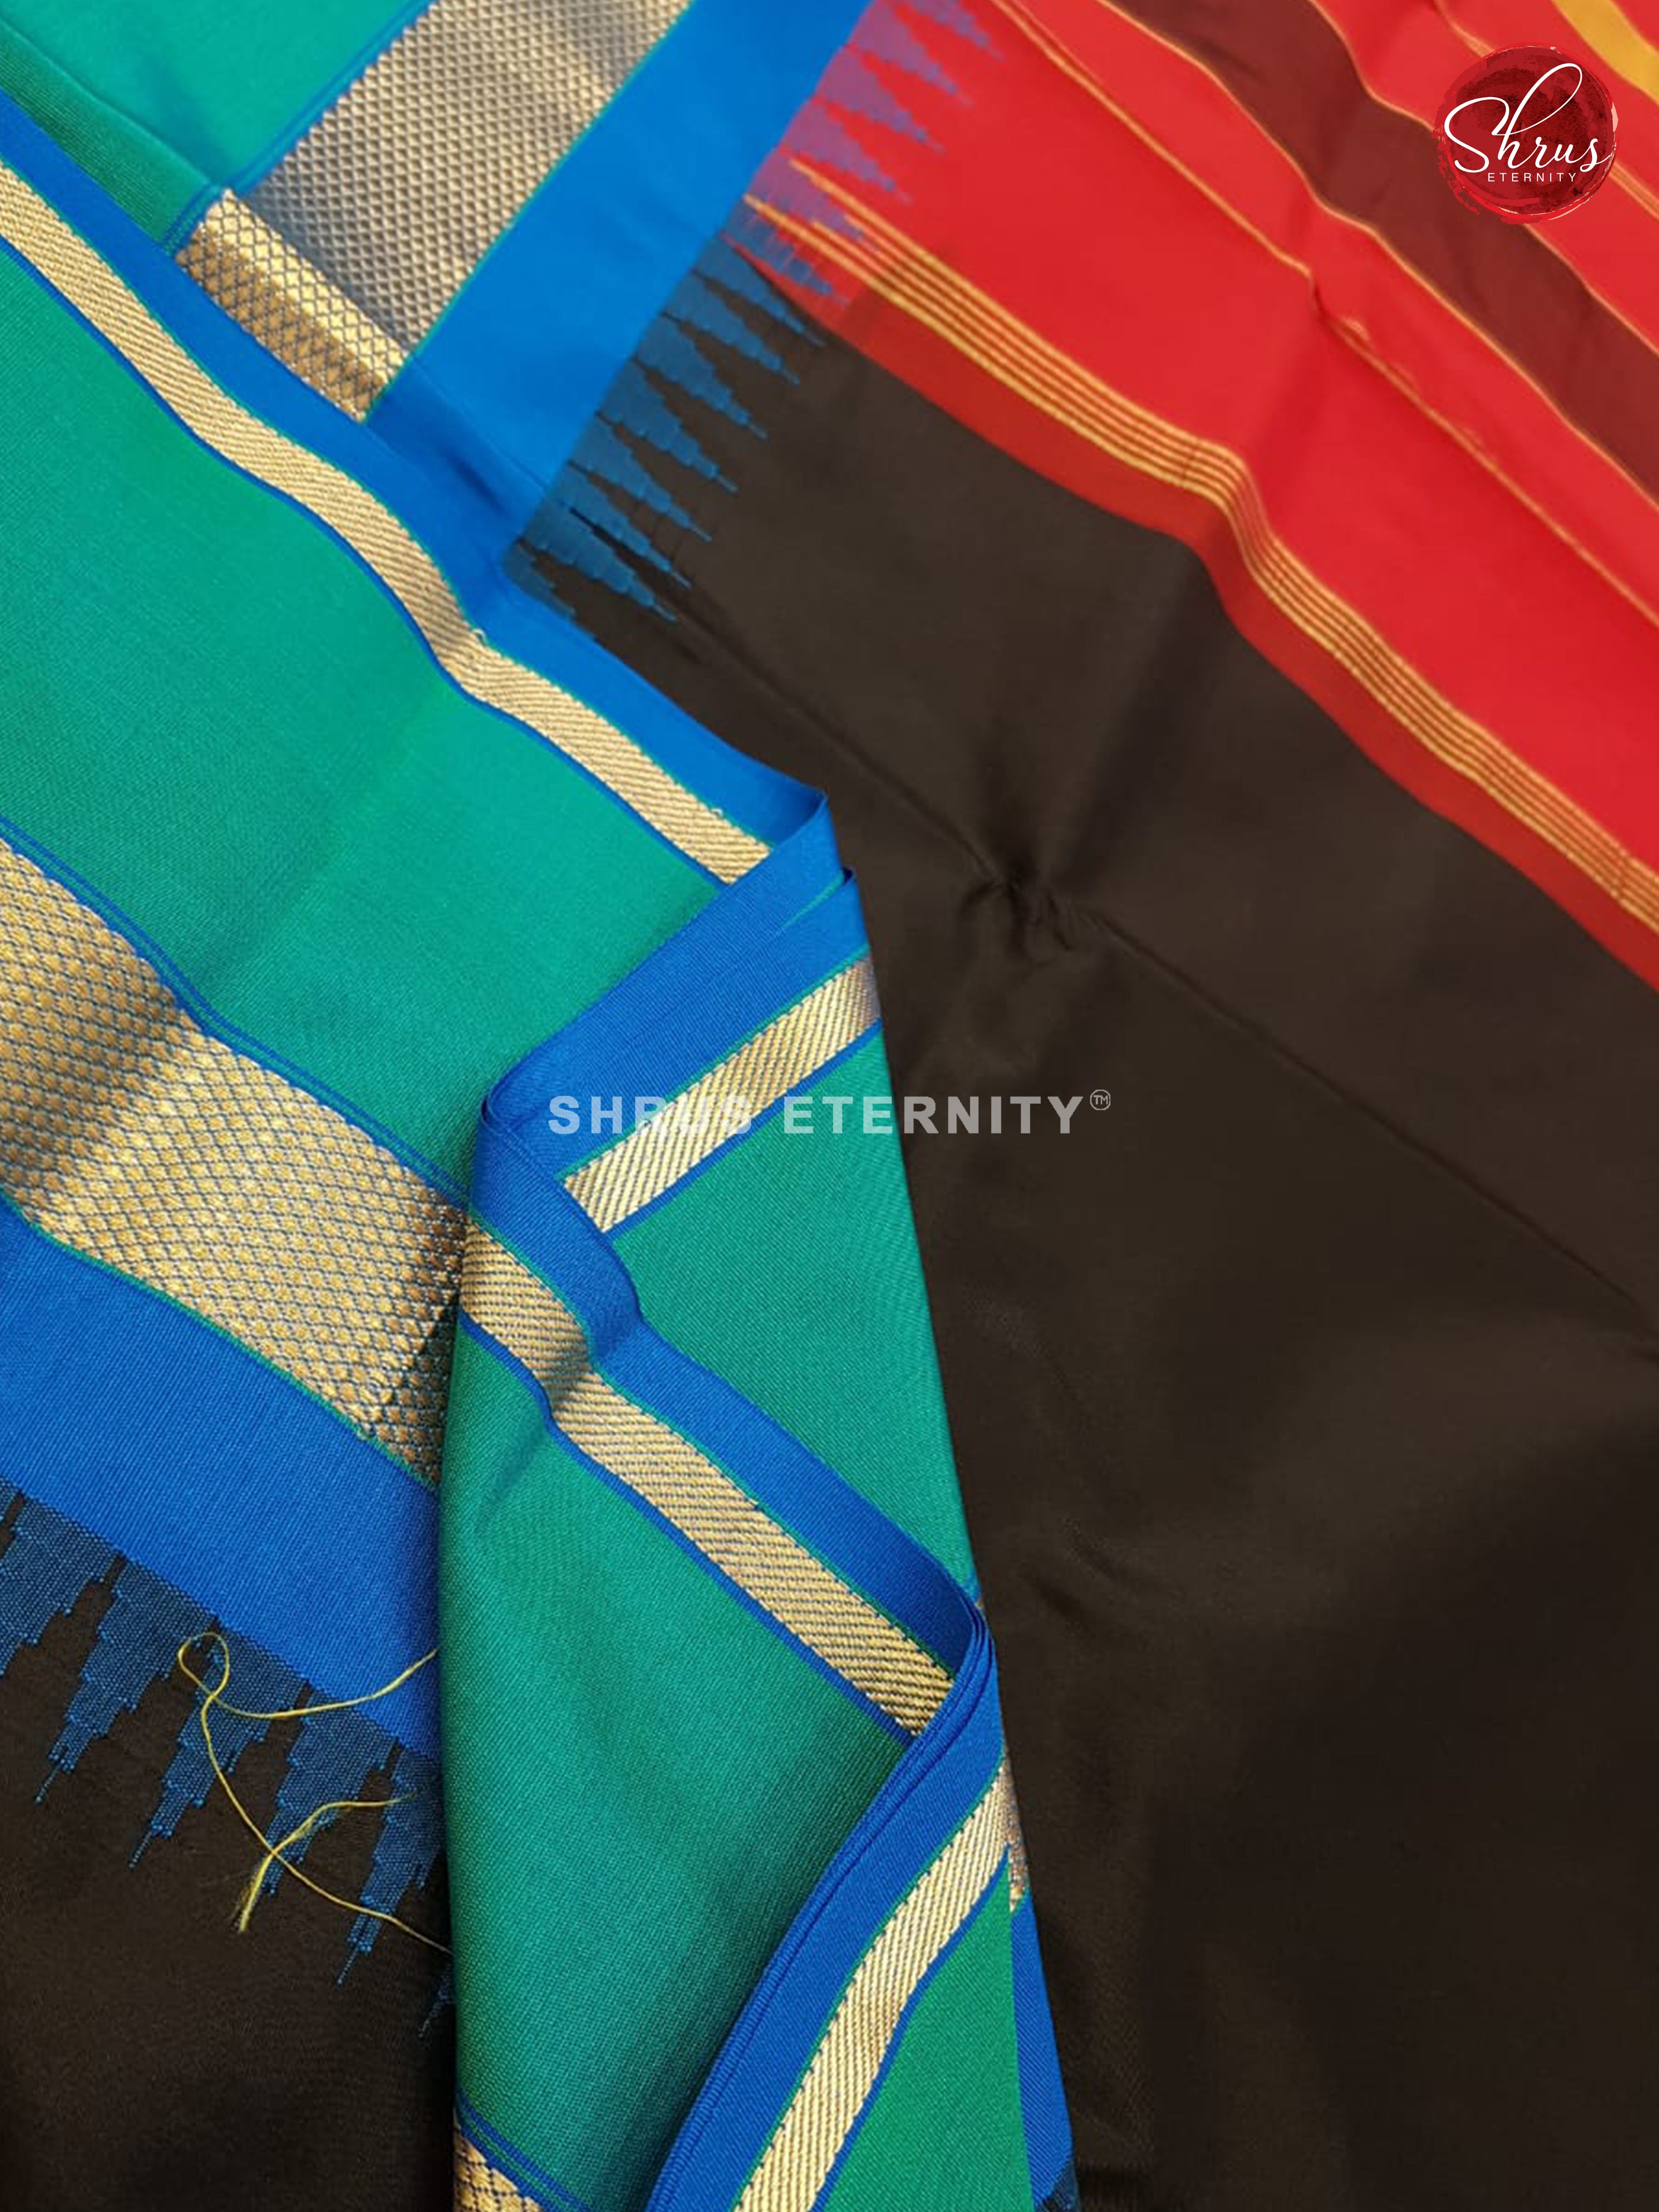 Black & Red - Bangalore Silk - Shop on ShrusEternity.com